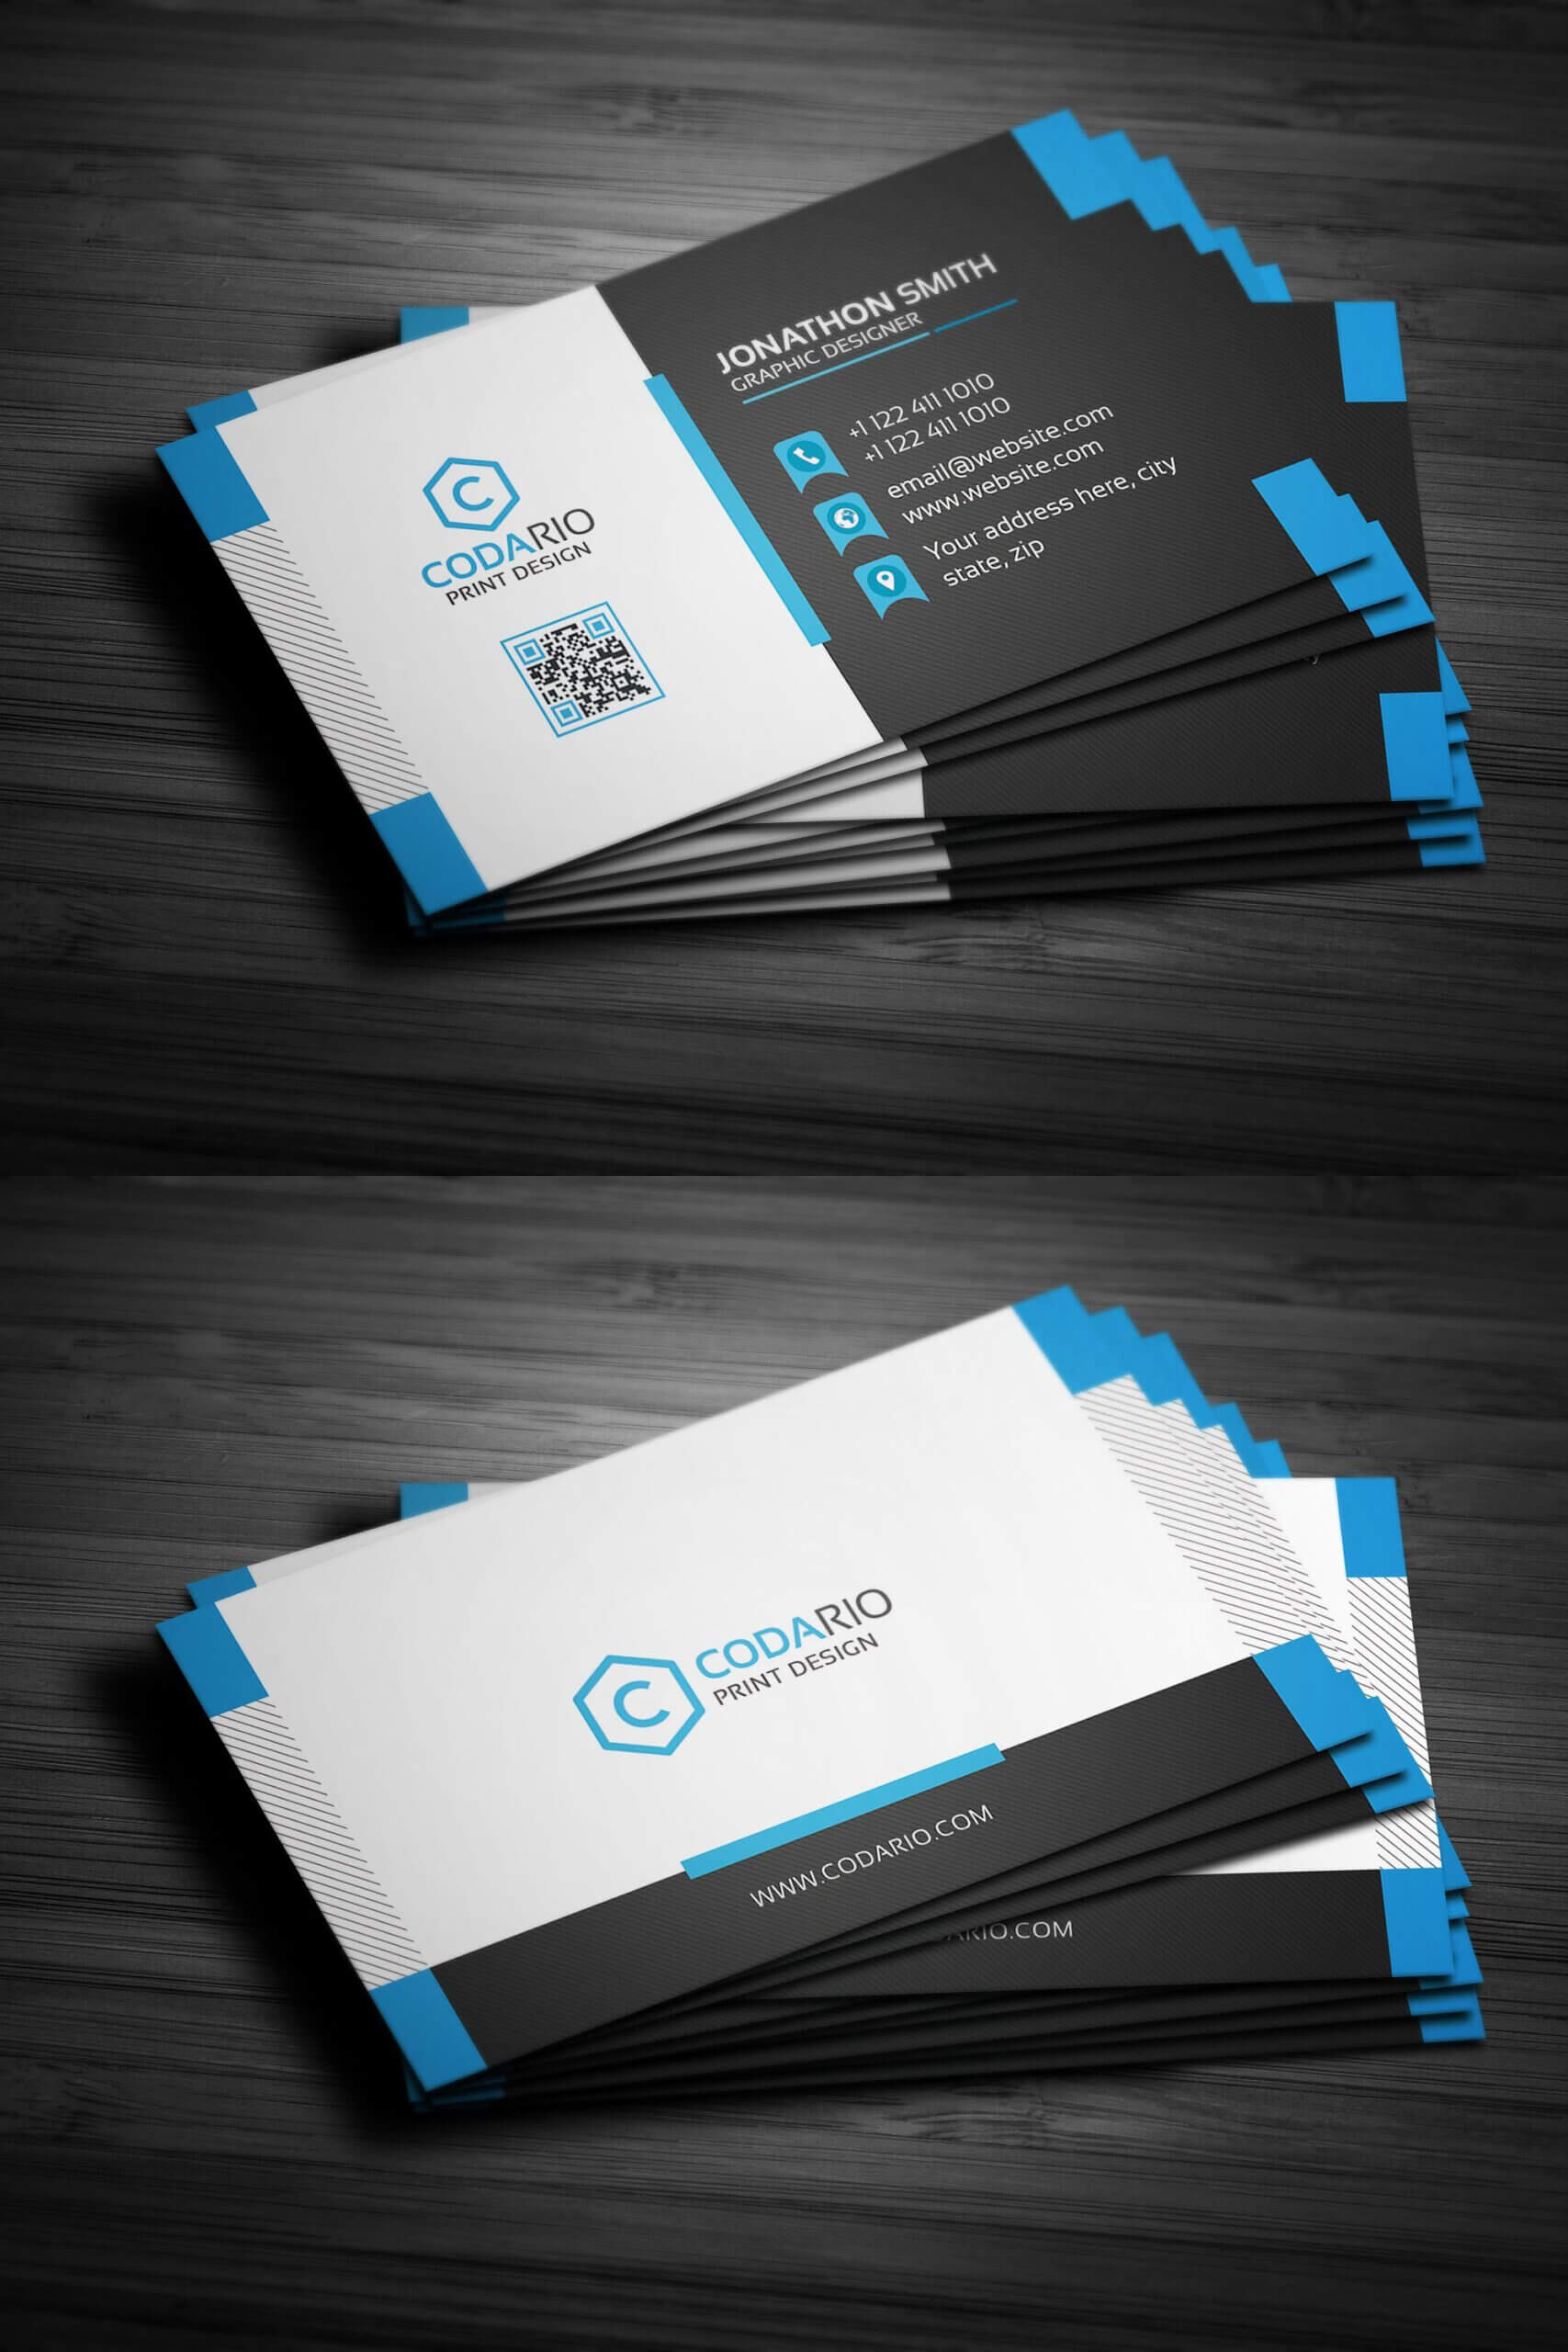 Modern Creative Business Card Template Psd | Create Business Pertaining To Creative Business Card Templates Psd